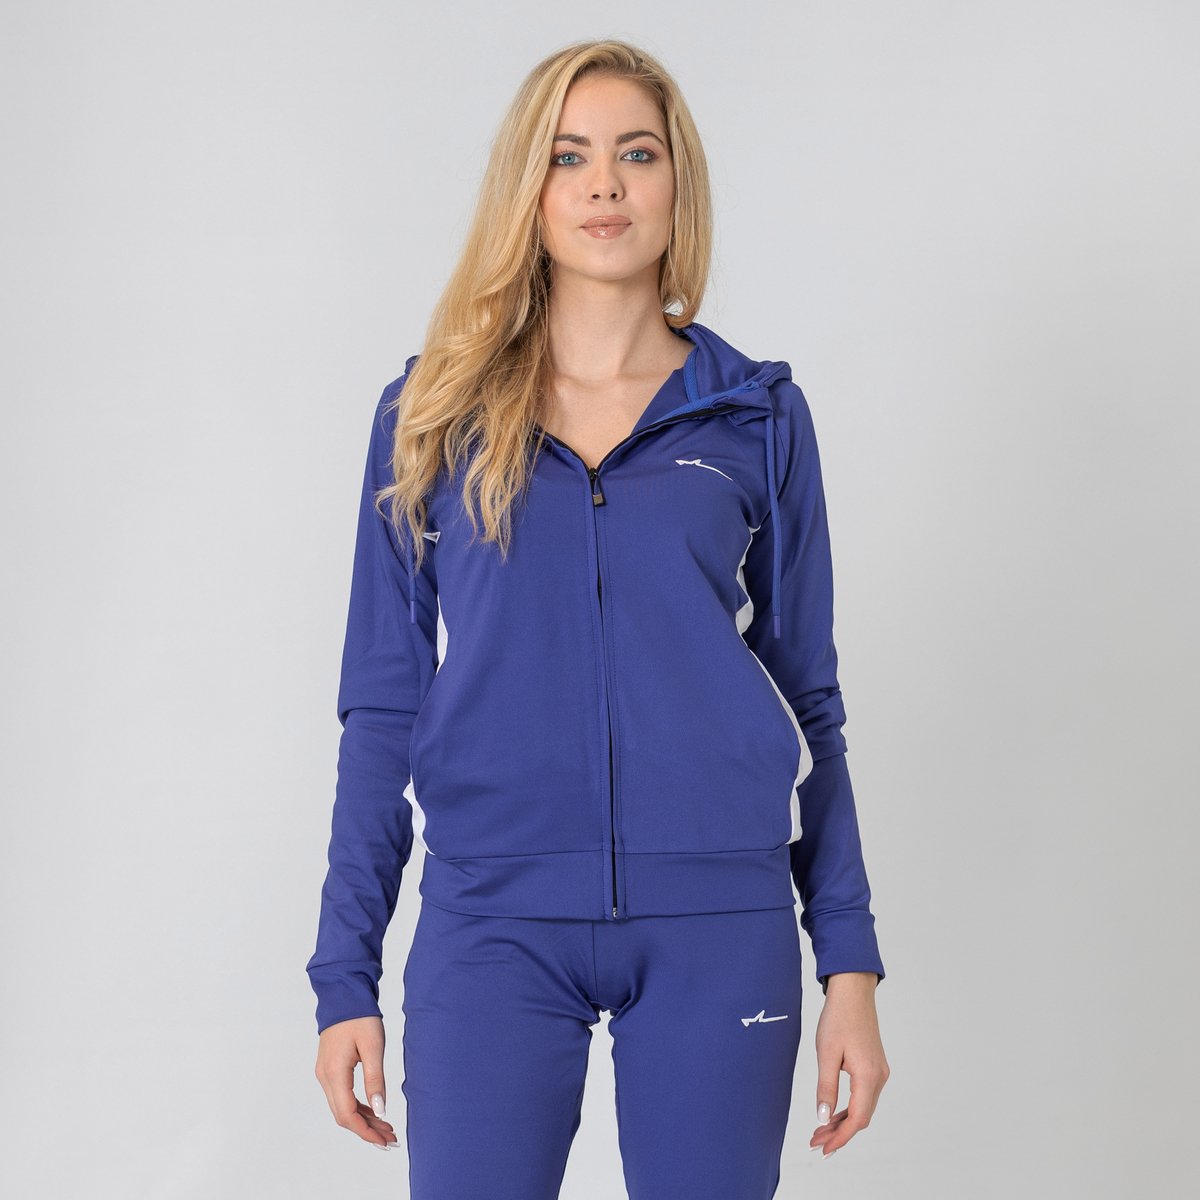 Forza Sportswear Navy Blue zipper hoodie - Urban line